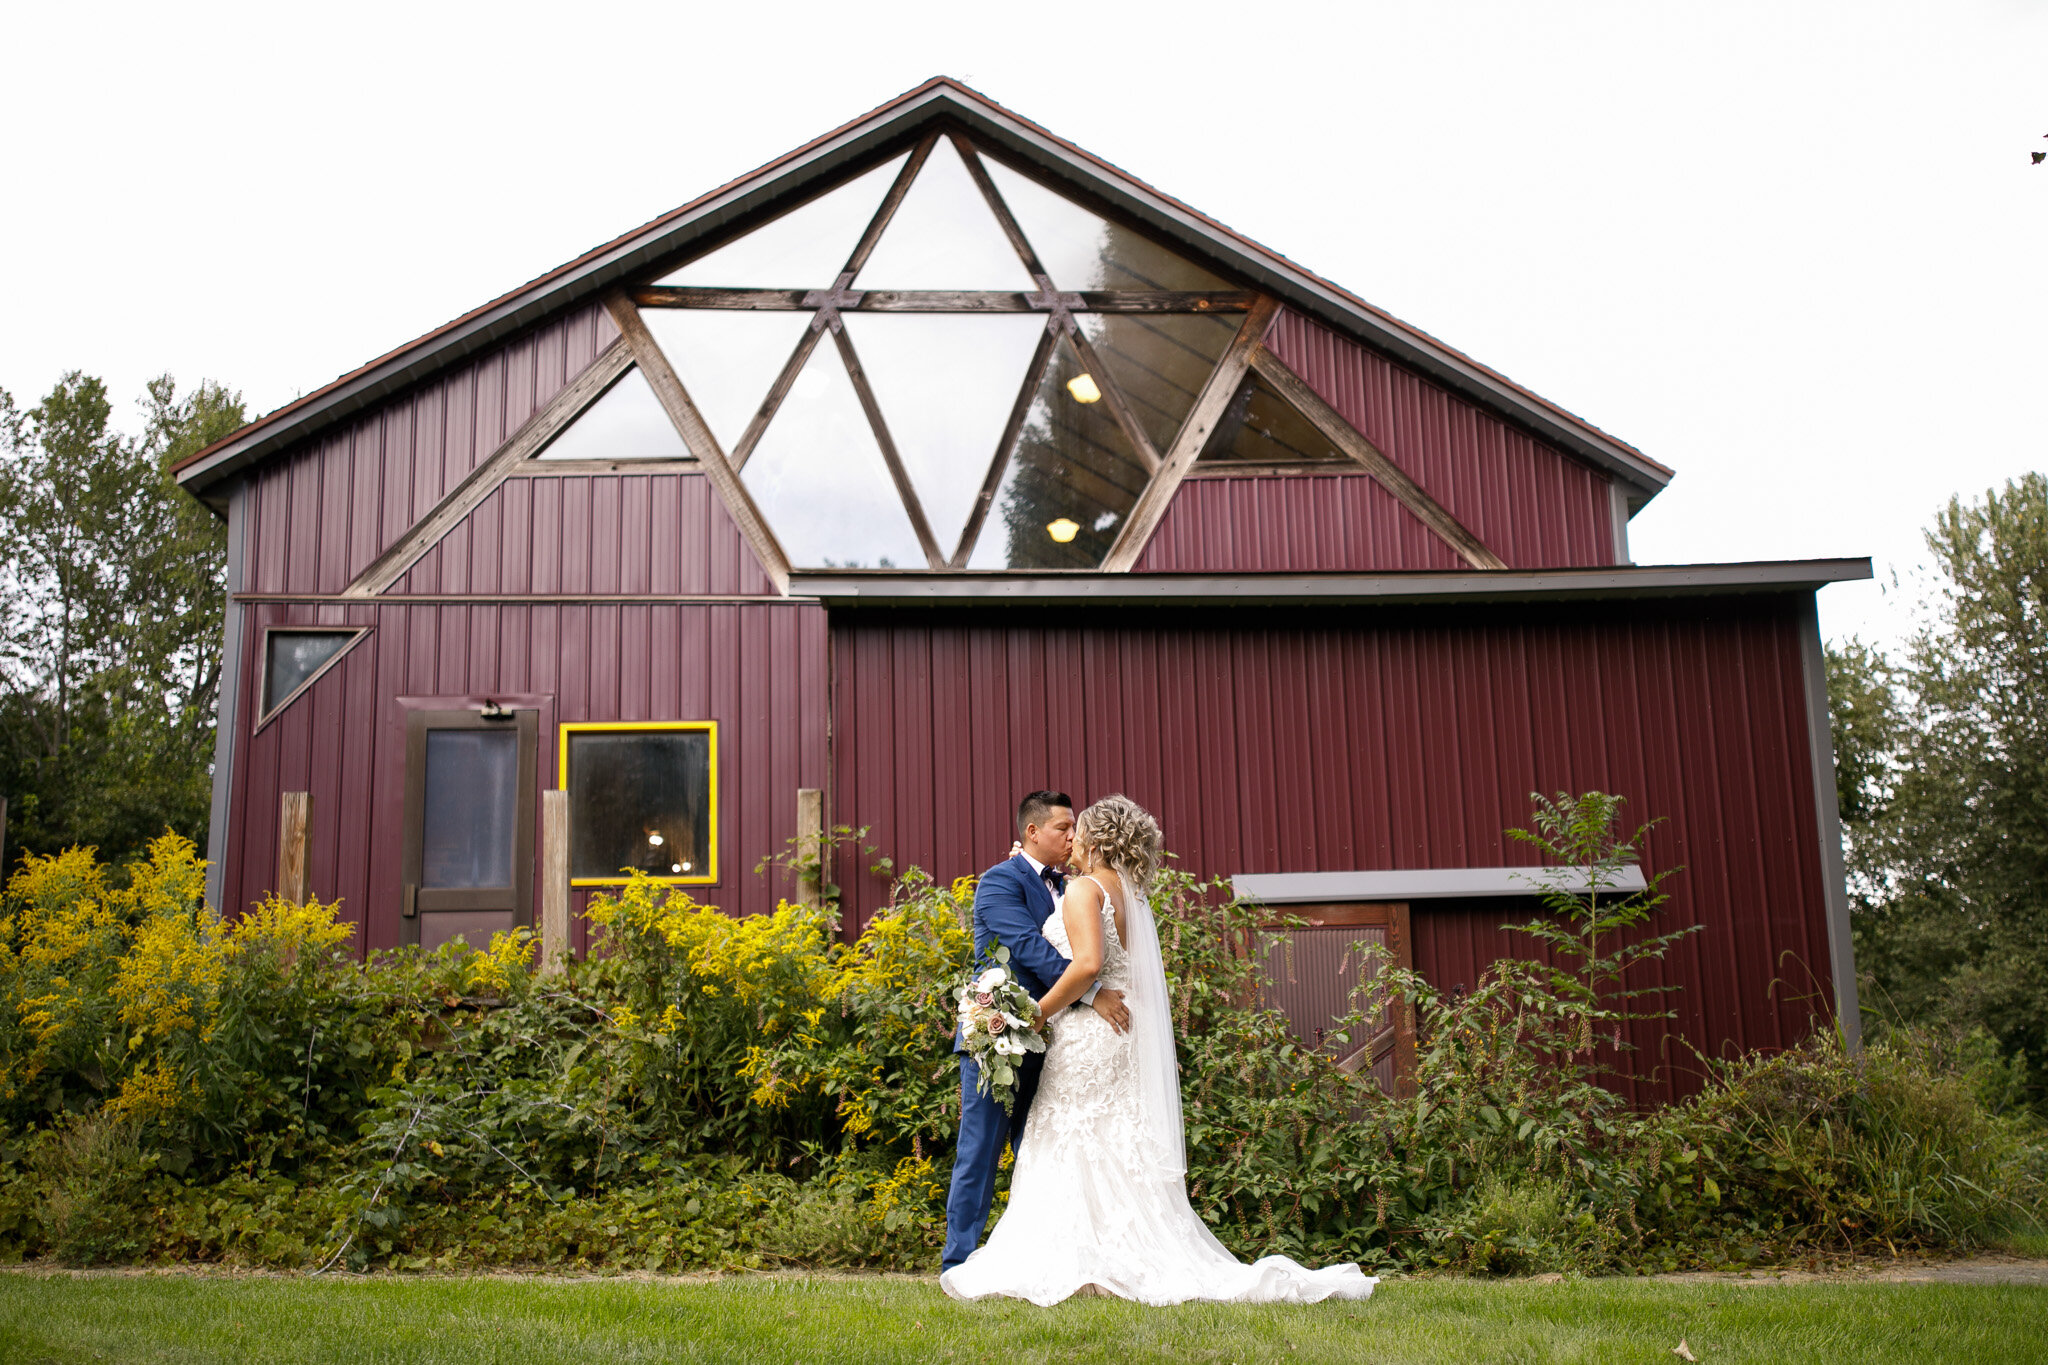 Pinnacle Center Wedding - Jillian and Rodrigo Wedding - Grand Rapids Wedding Photographer - West Michigan Wedding Photographer - West Michigan Wedding - Farmhouse Wedding - J Darling Photo072.jpg